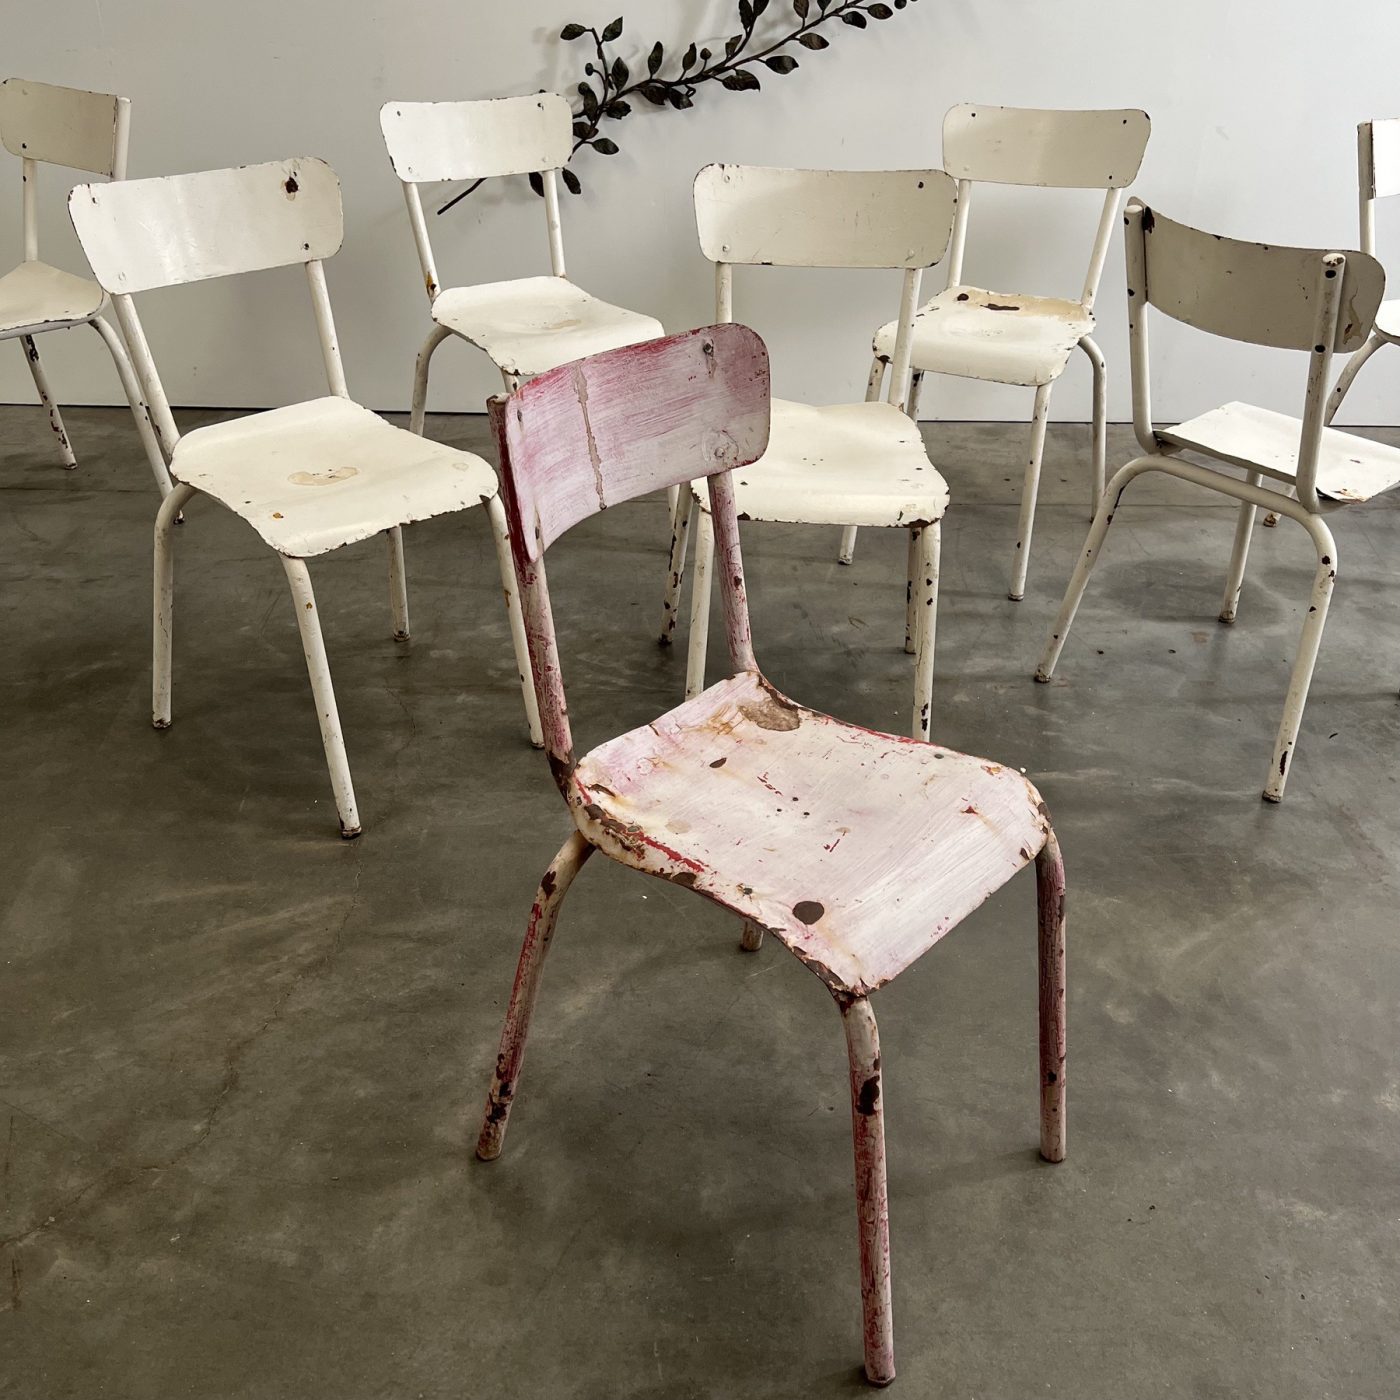 objet-vagabond-metal-chairs0010